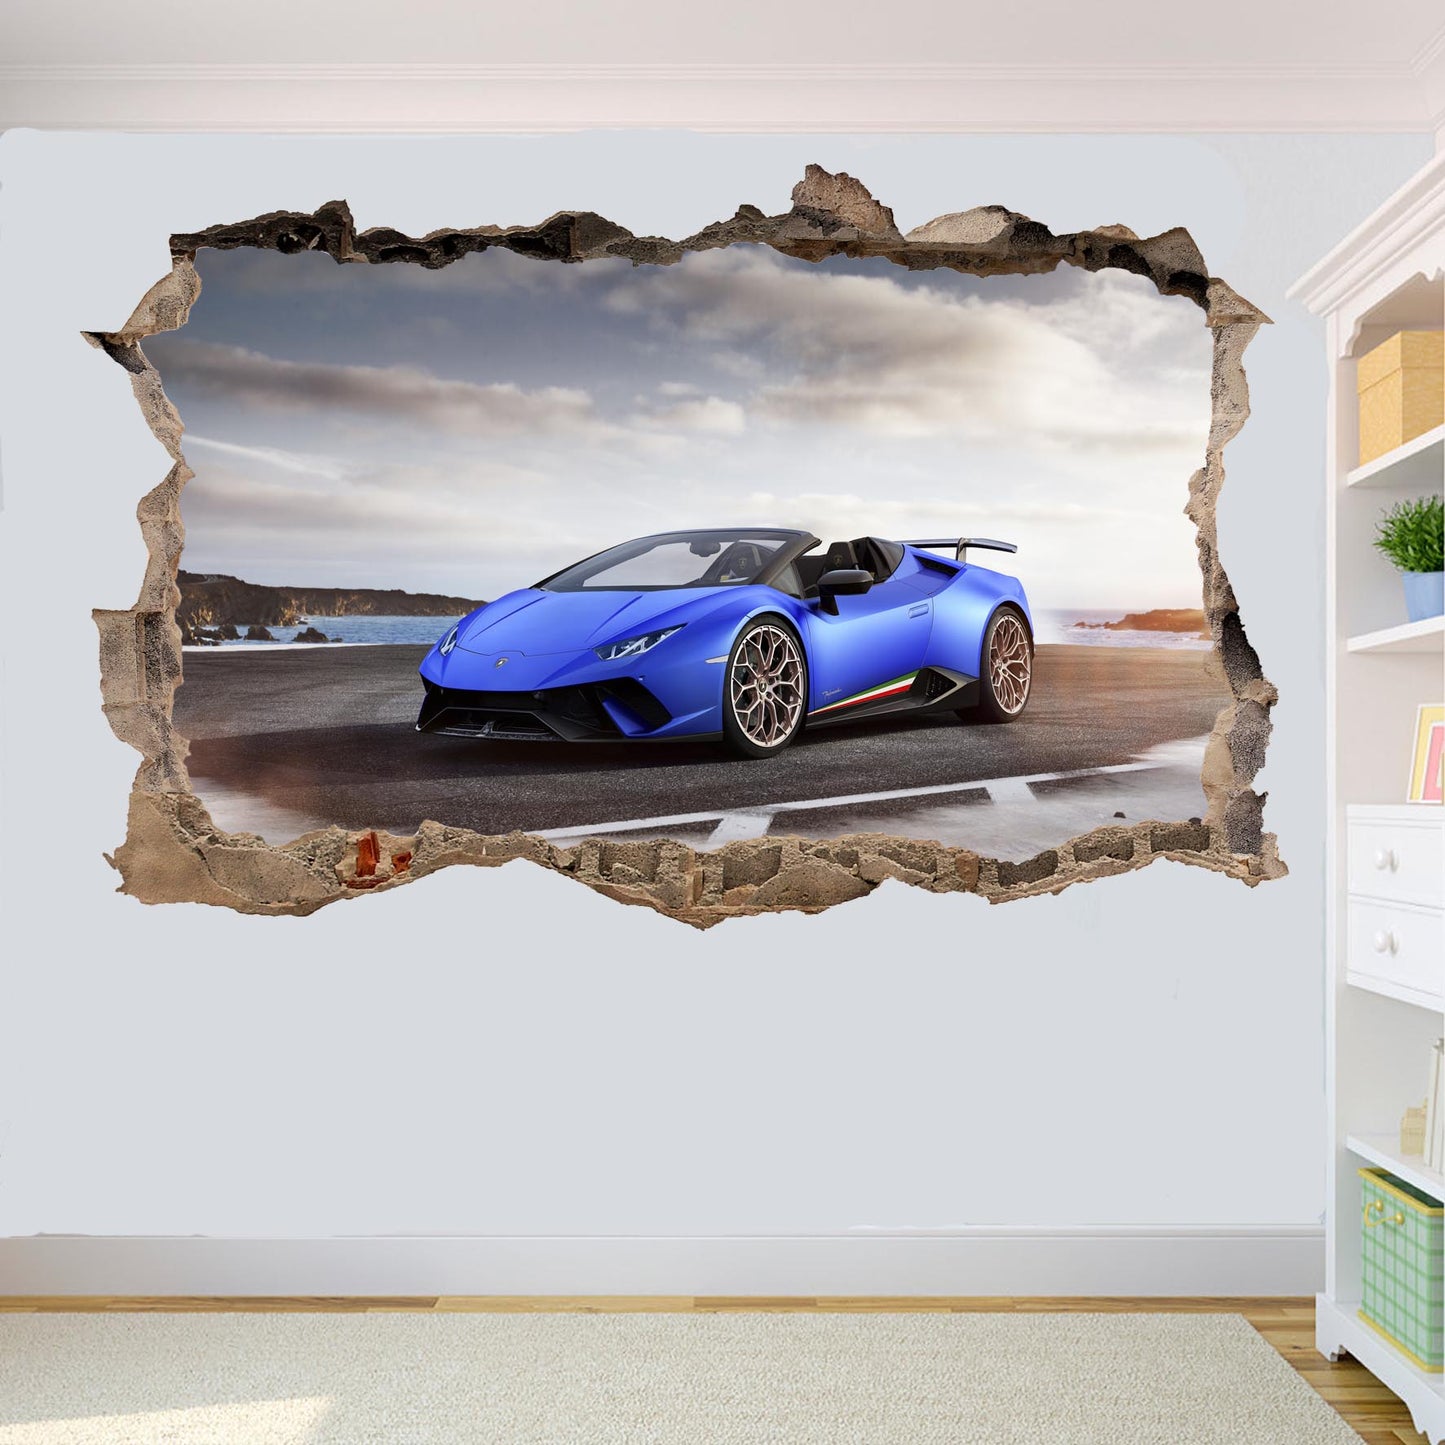 Lamborghini Roadster convertable super sports car poster wall sticker mural decal